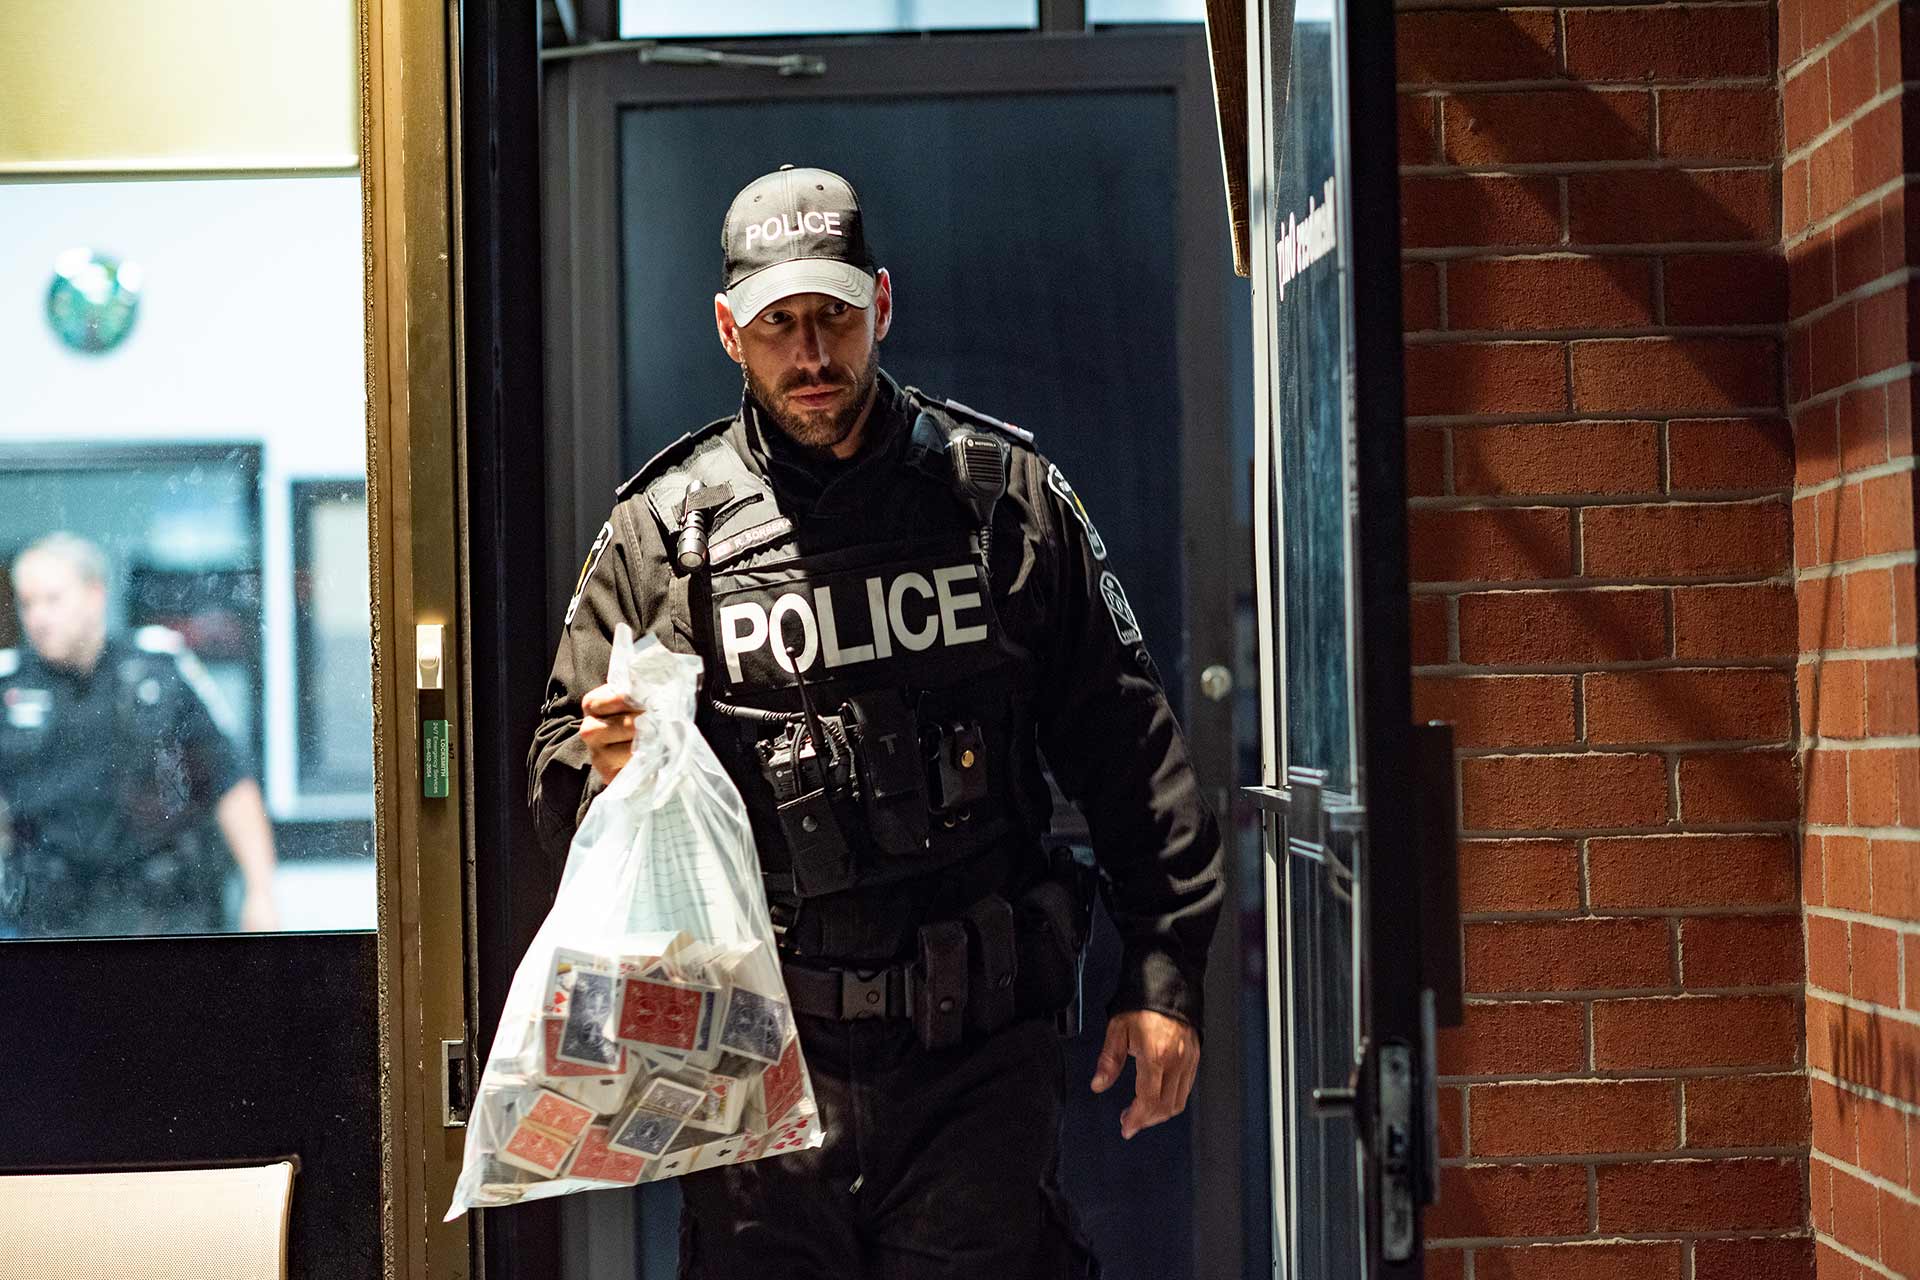 An officer emerges from a building holding alleged gambling paraphernalia qhiddkiqeiqqdinv